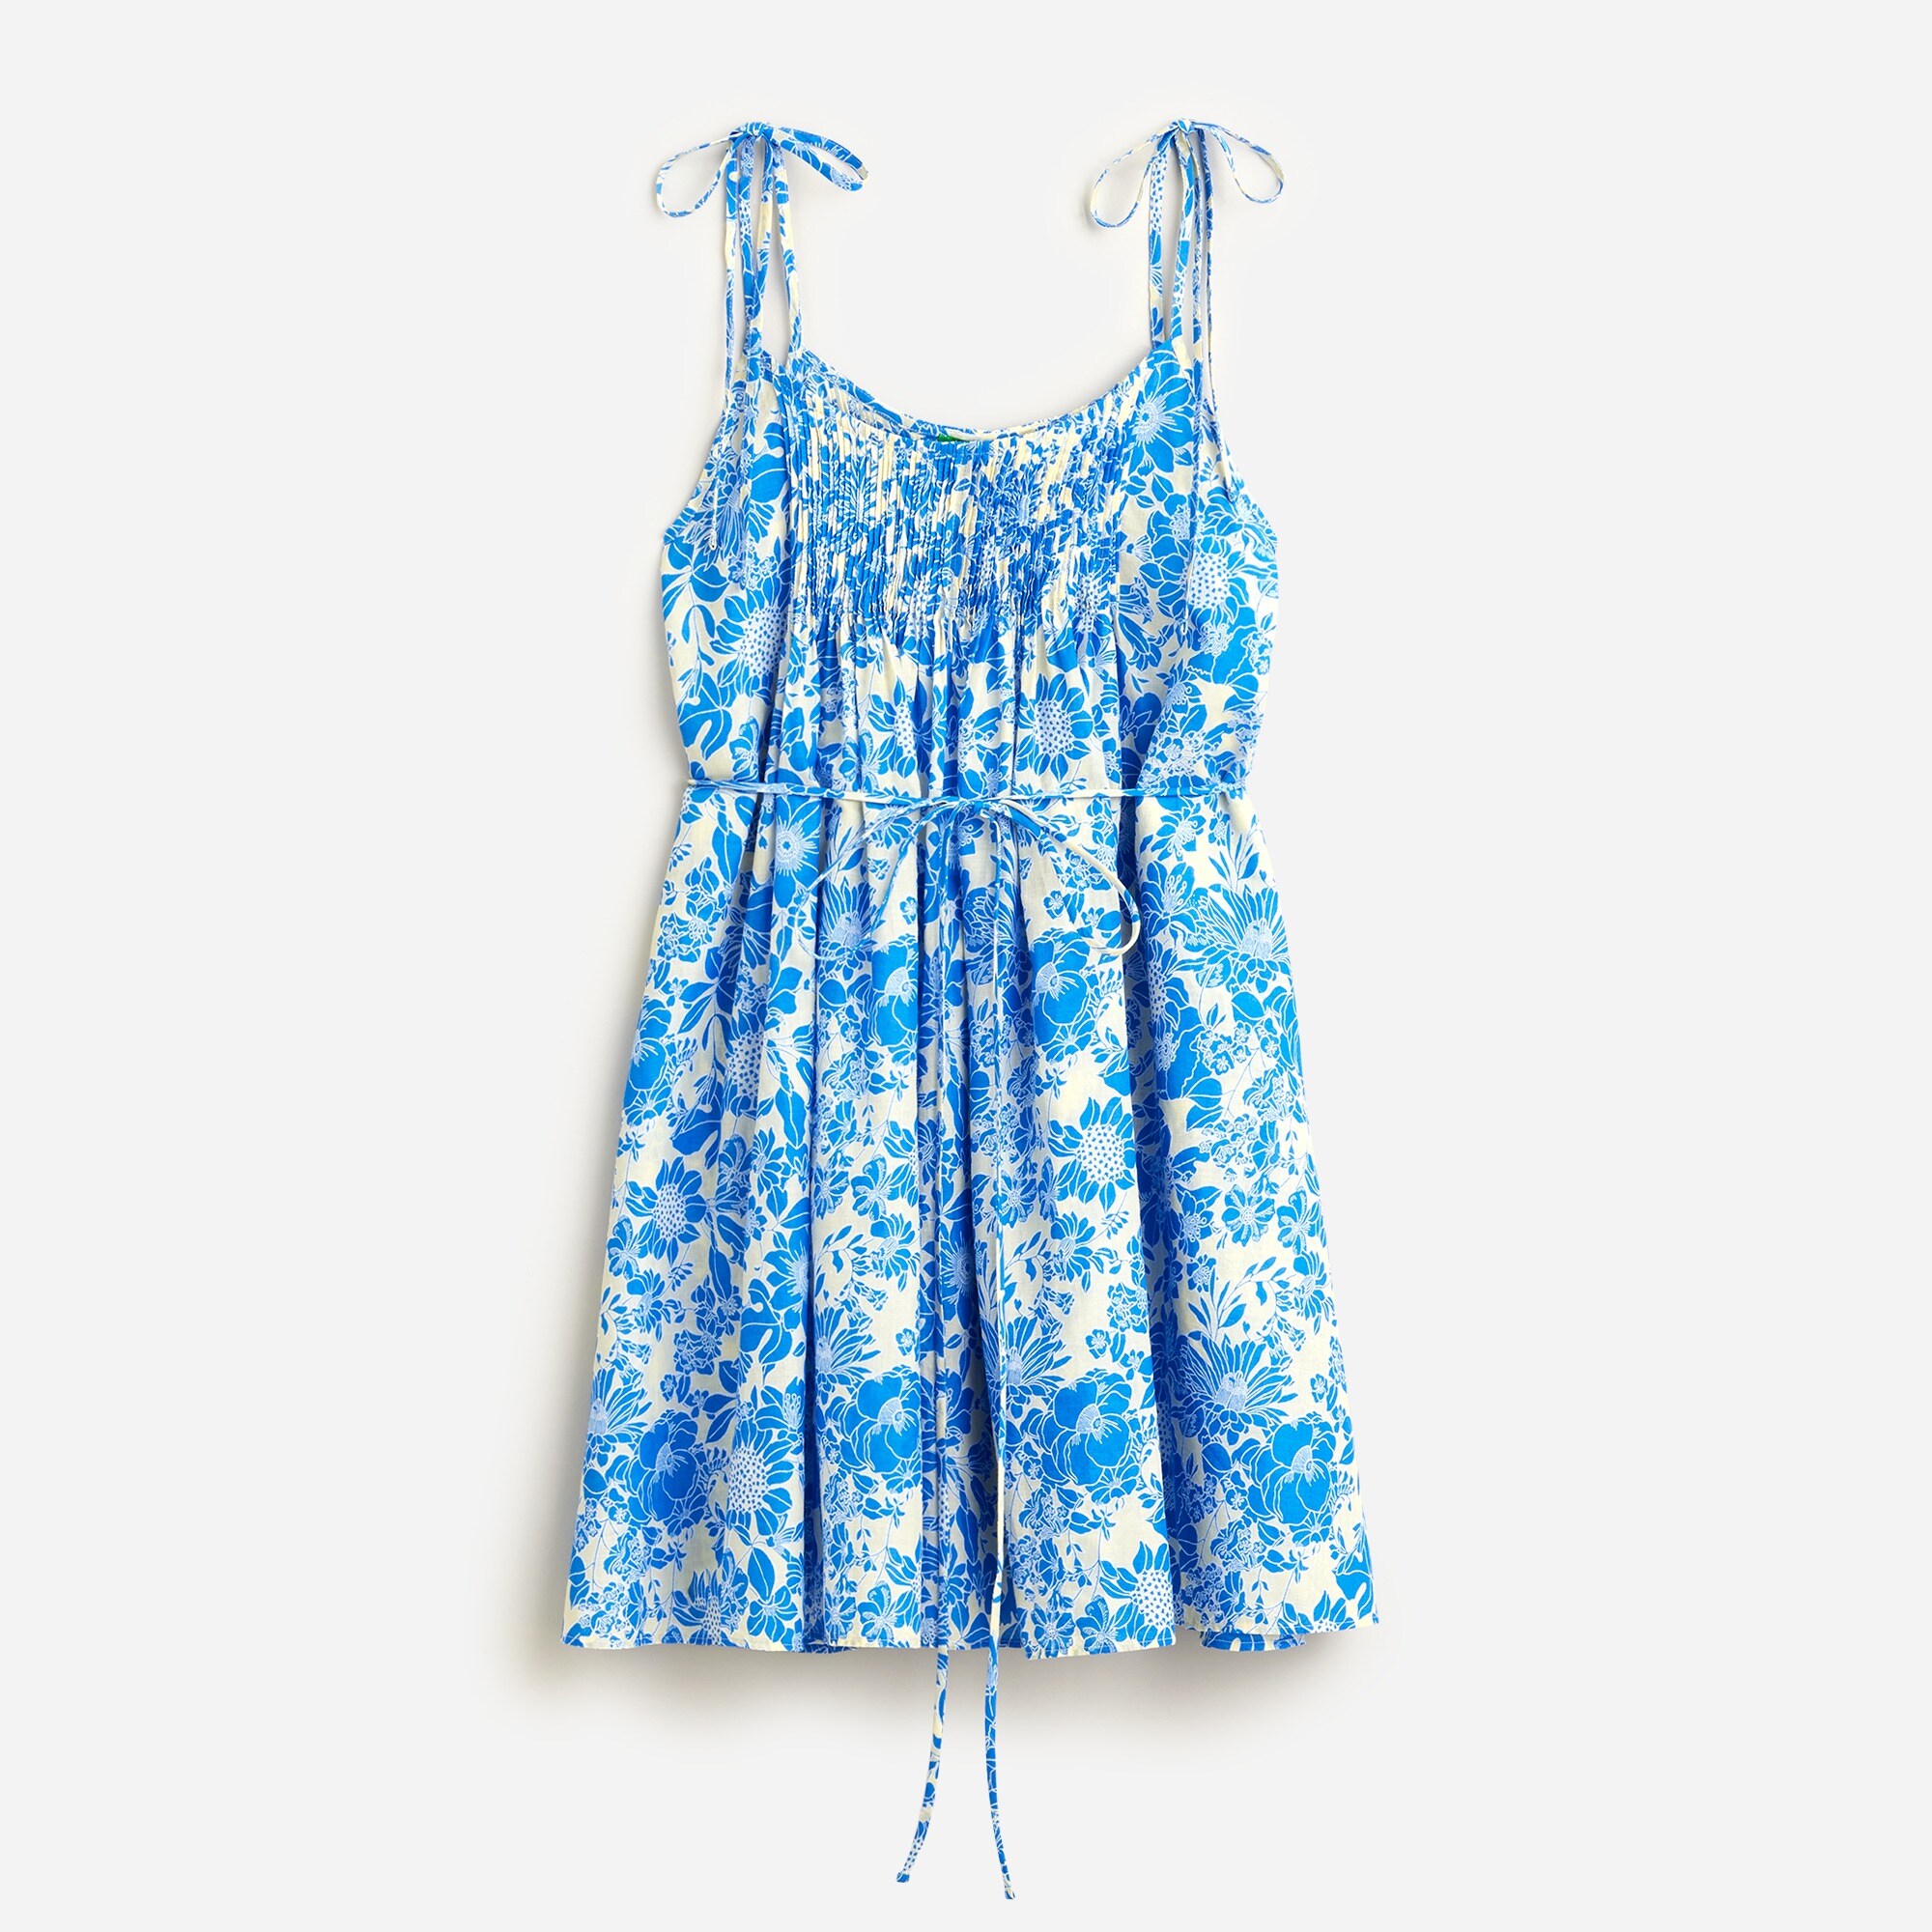  Halter cross-back cotton voile cover-up dress in blue floral